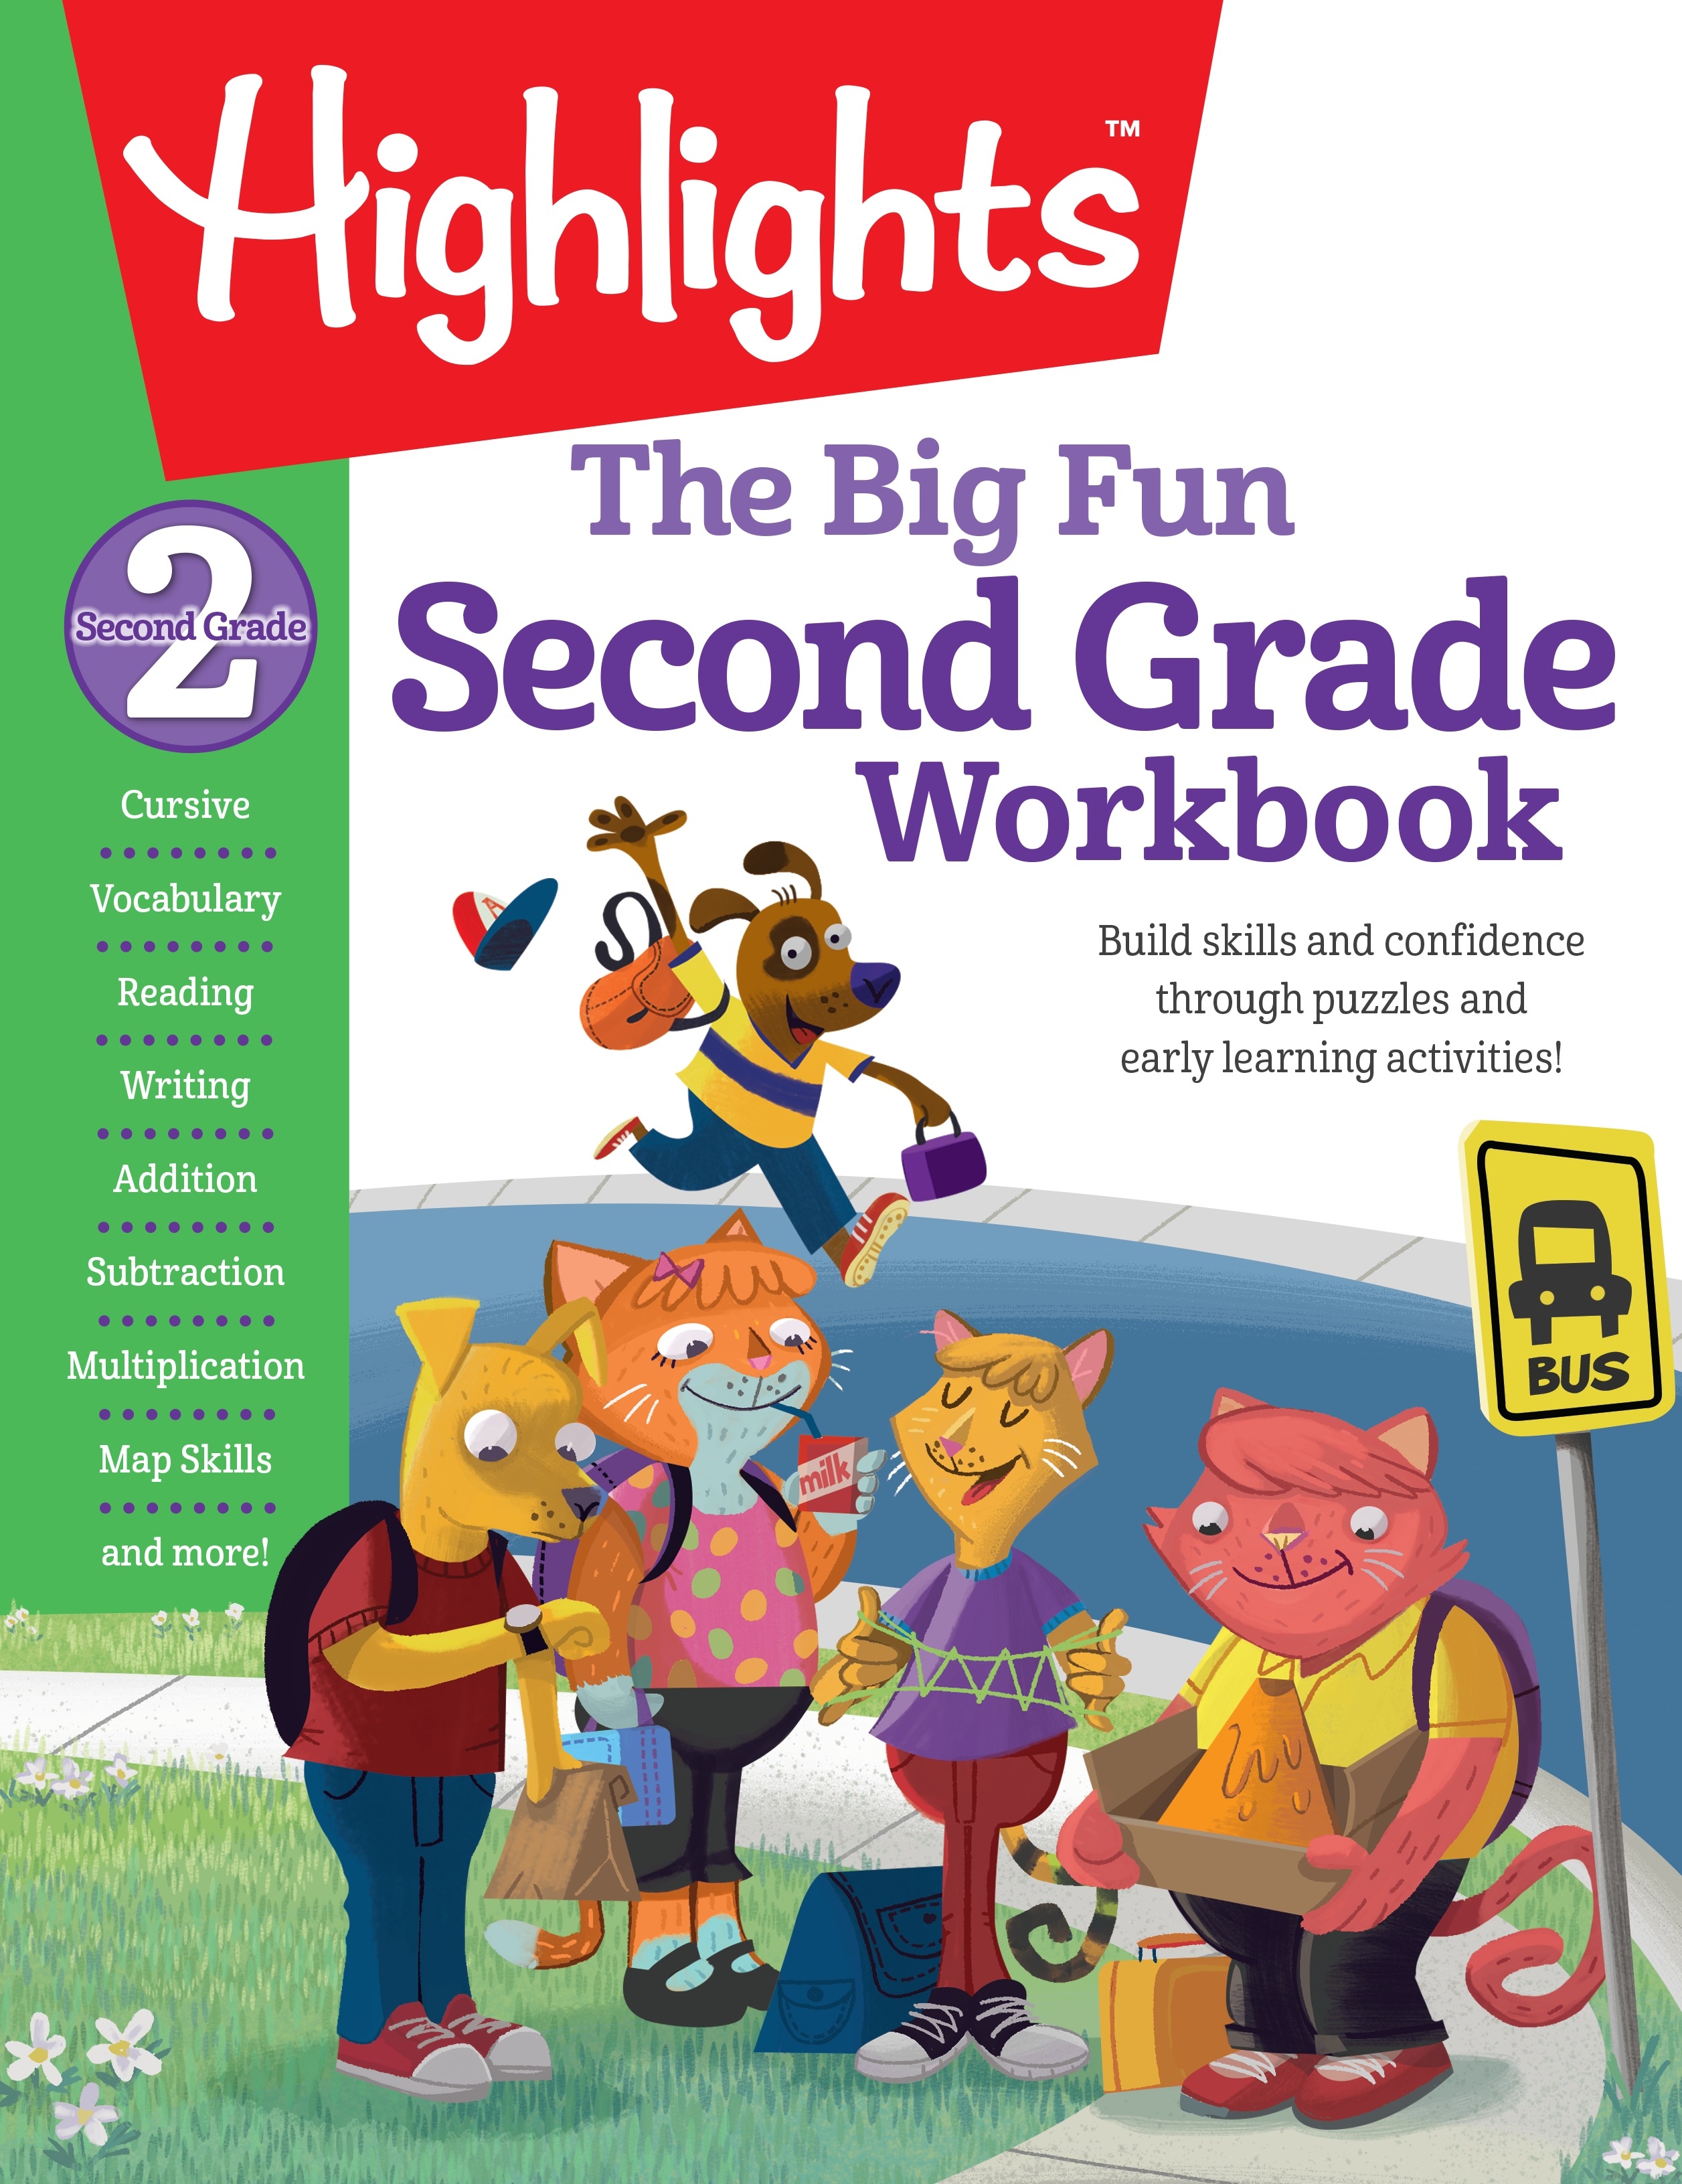 the-big-fun-second-grade-workbook-by-highlights-penguin-books-australia